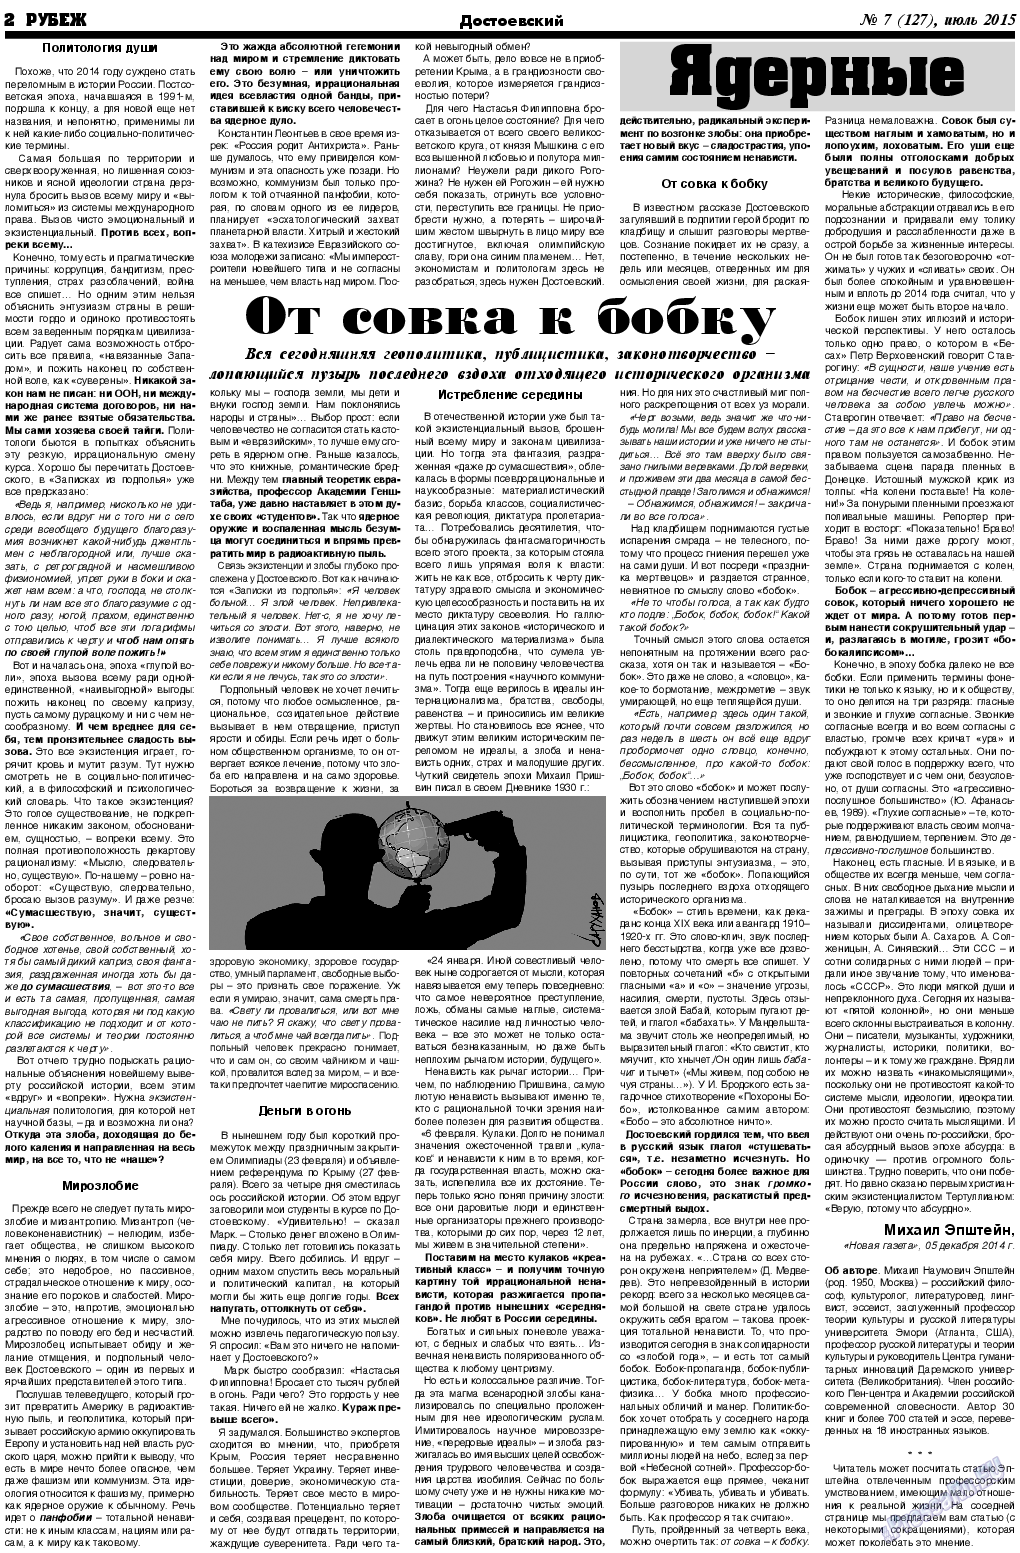 Рубеж, газета. 2015 №7 стр.2